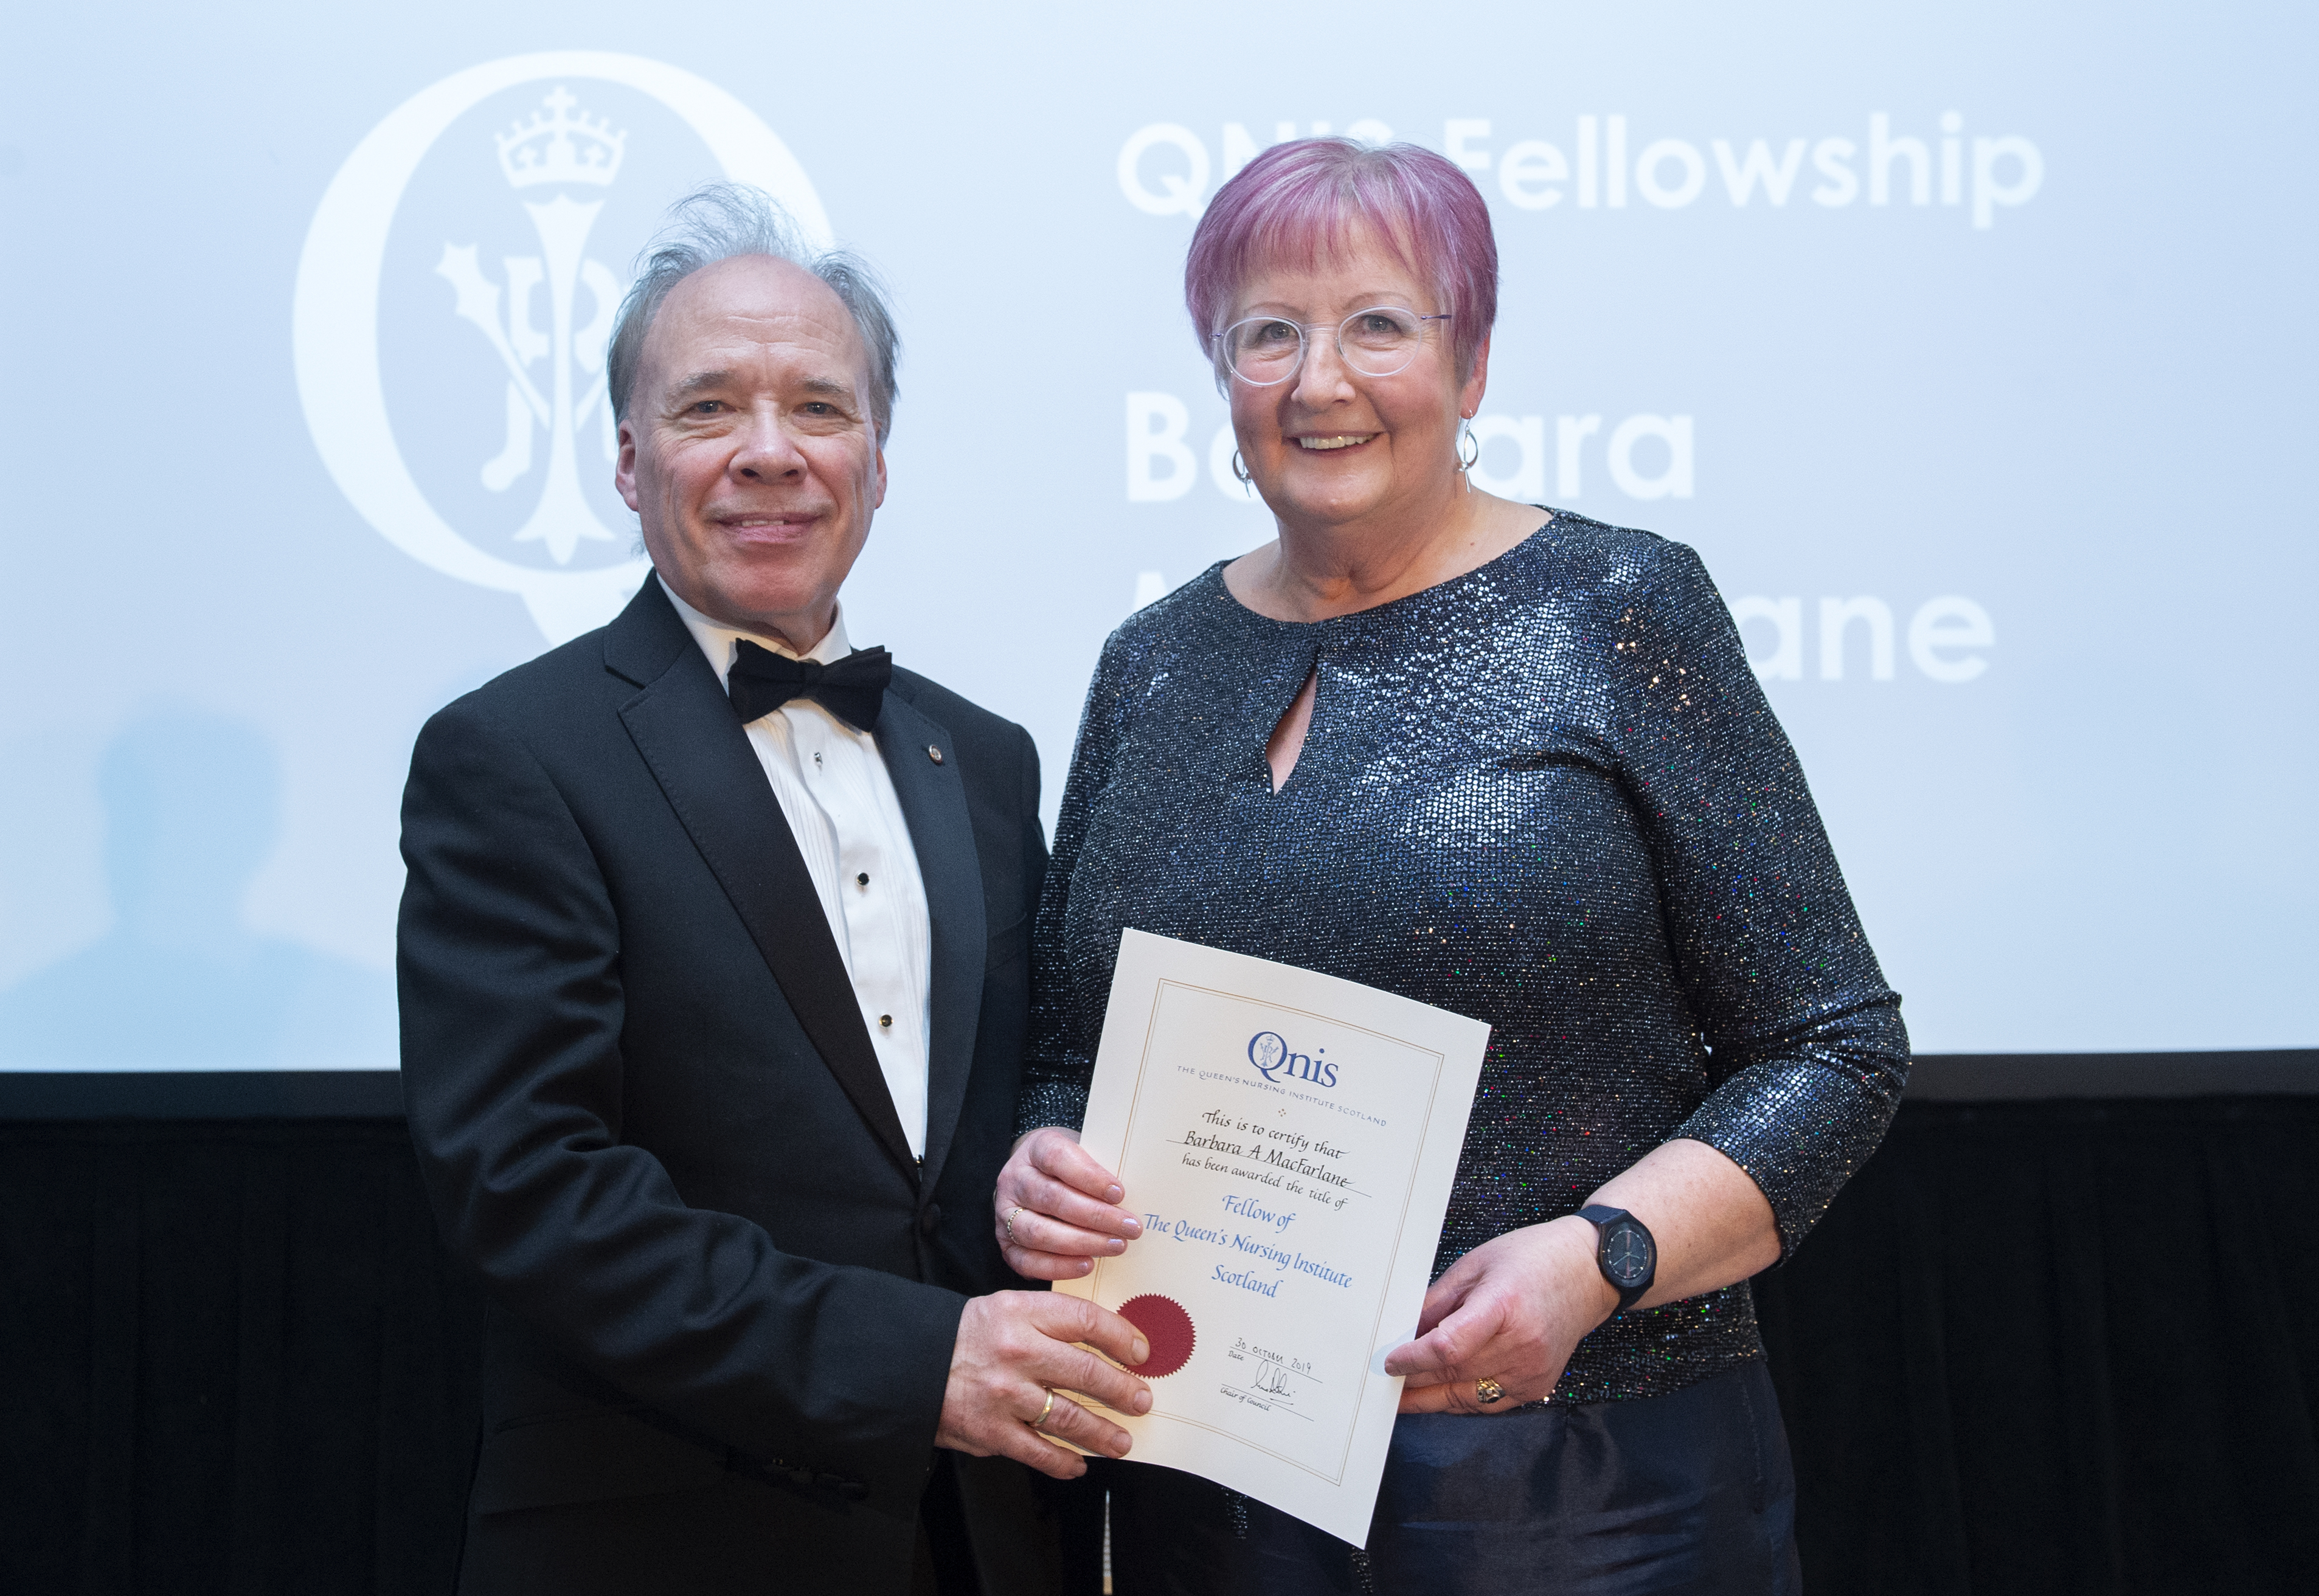 Barbara MacFarlane receiving her award from Professor Sir Lewis Ritchie.